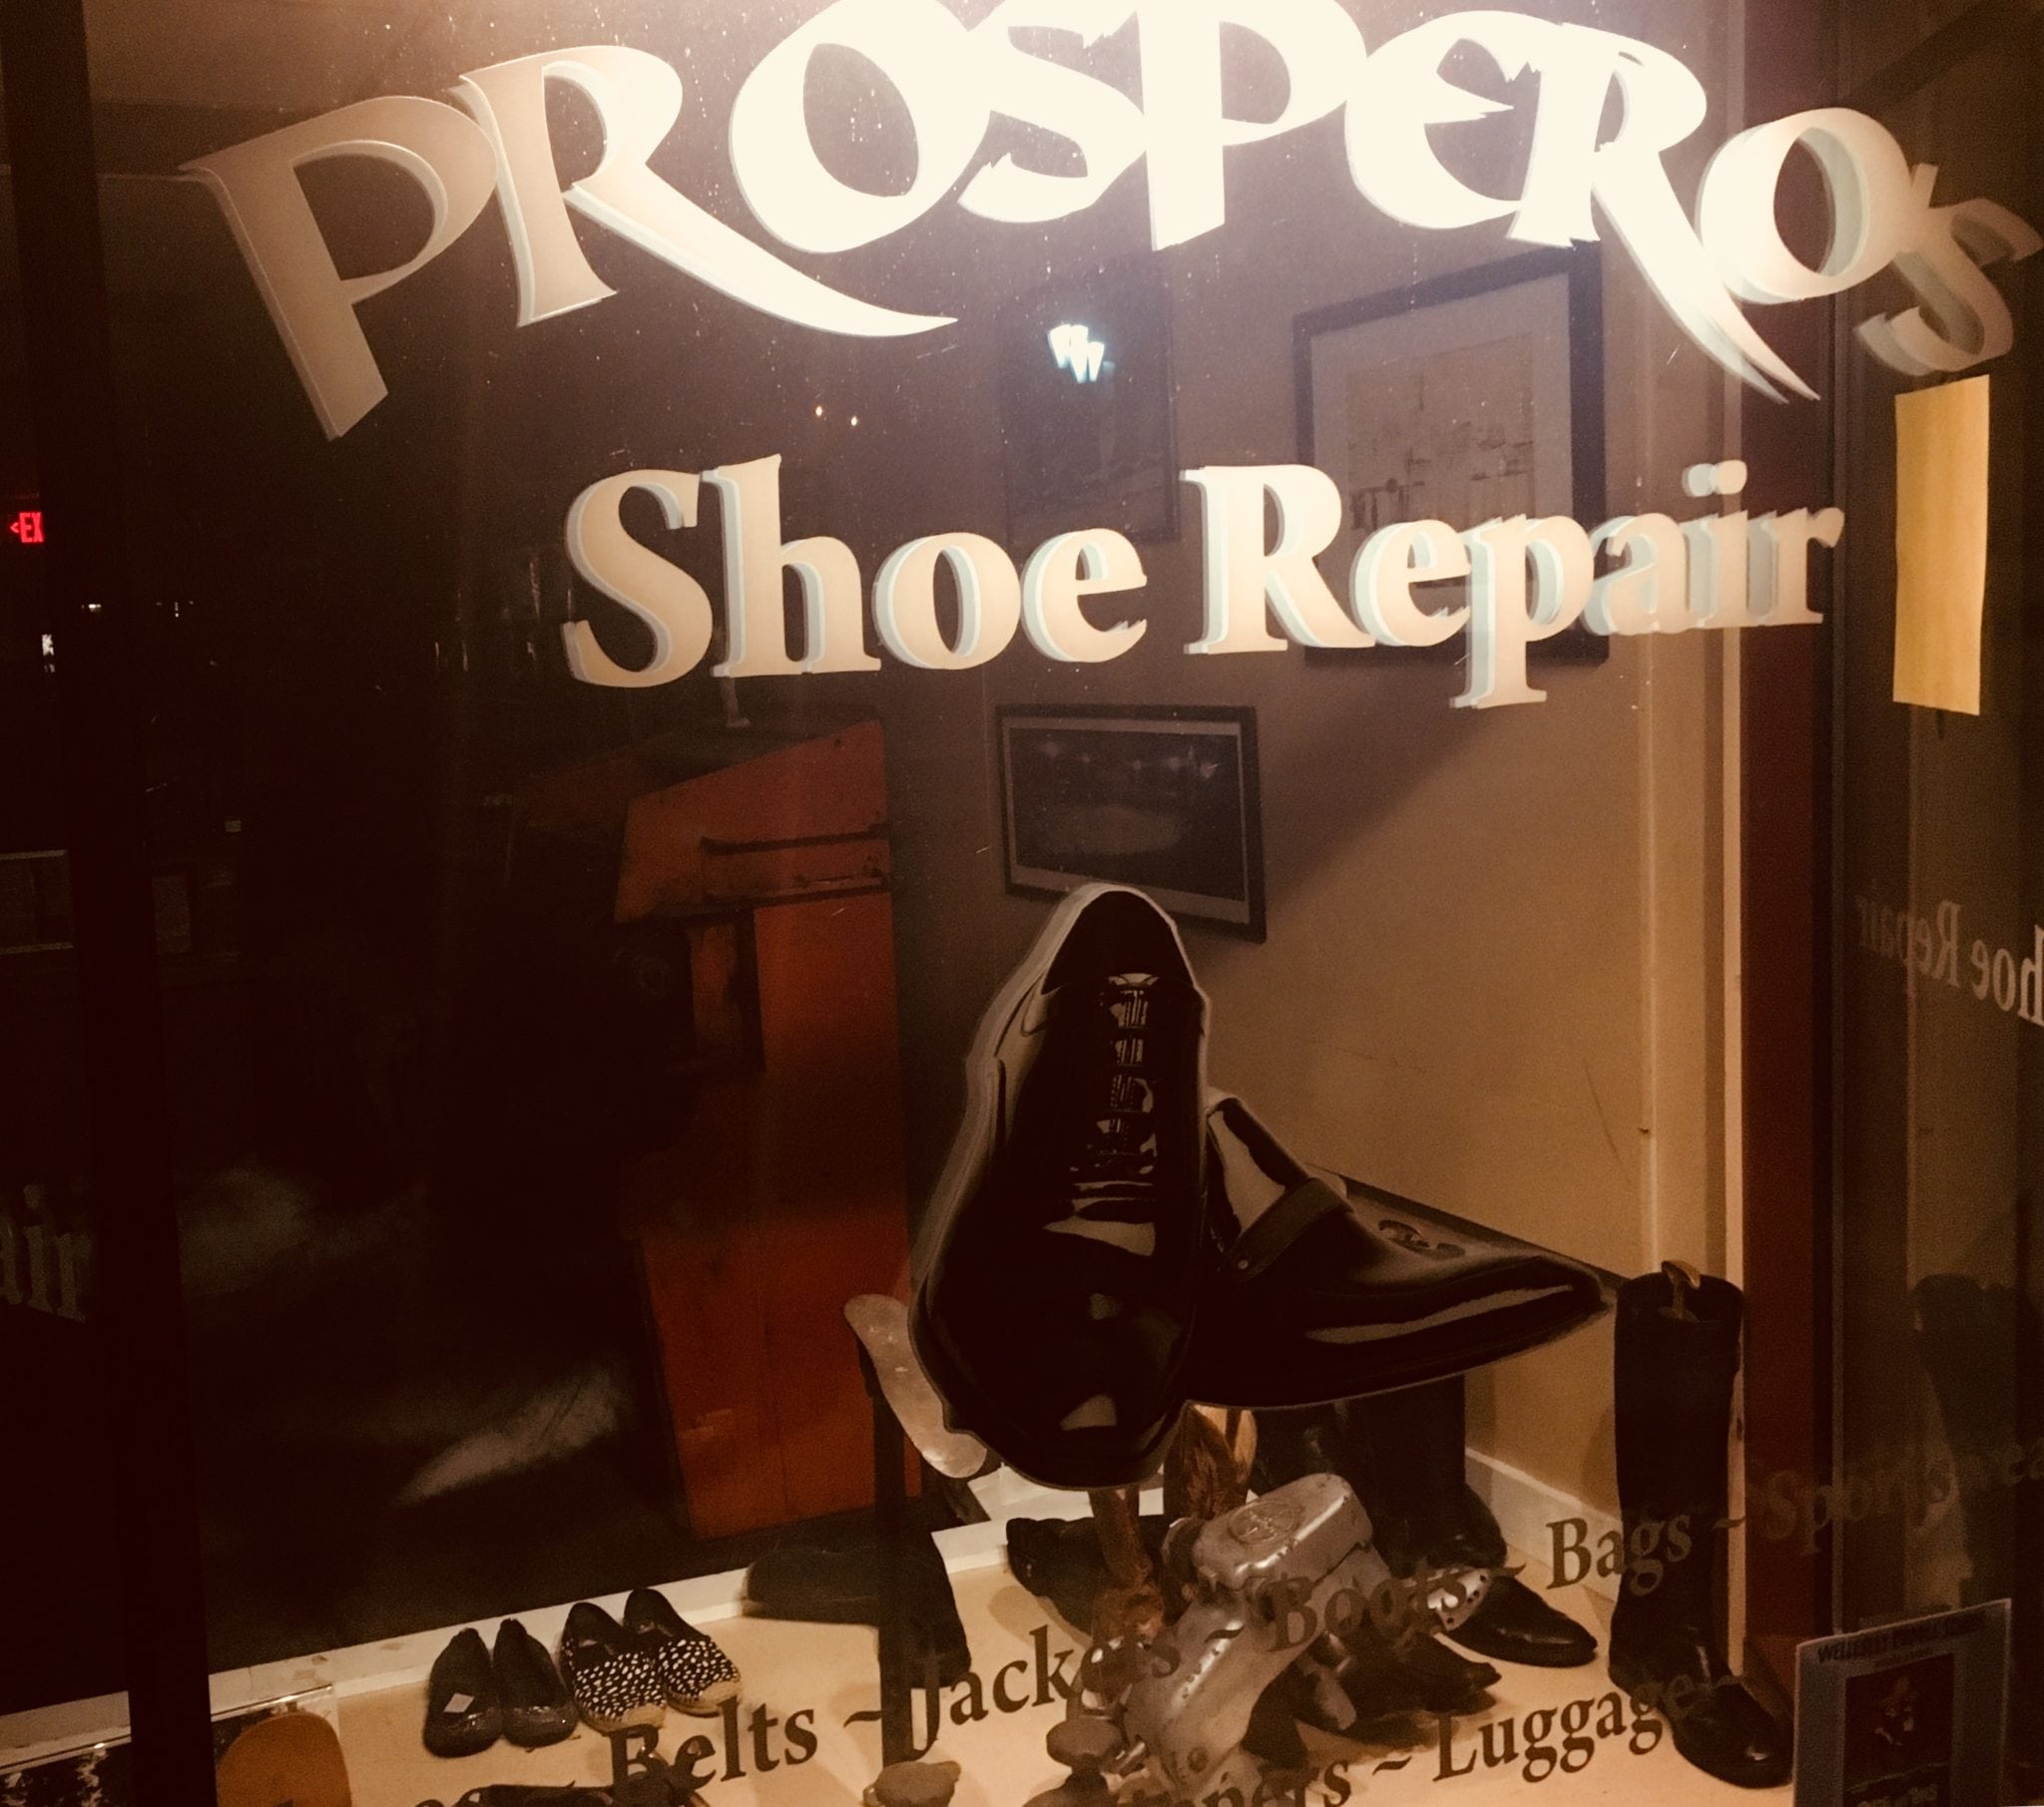 Wellesley Prospero's Shoe Repair